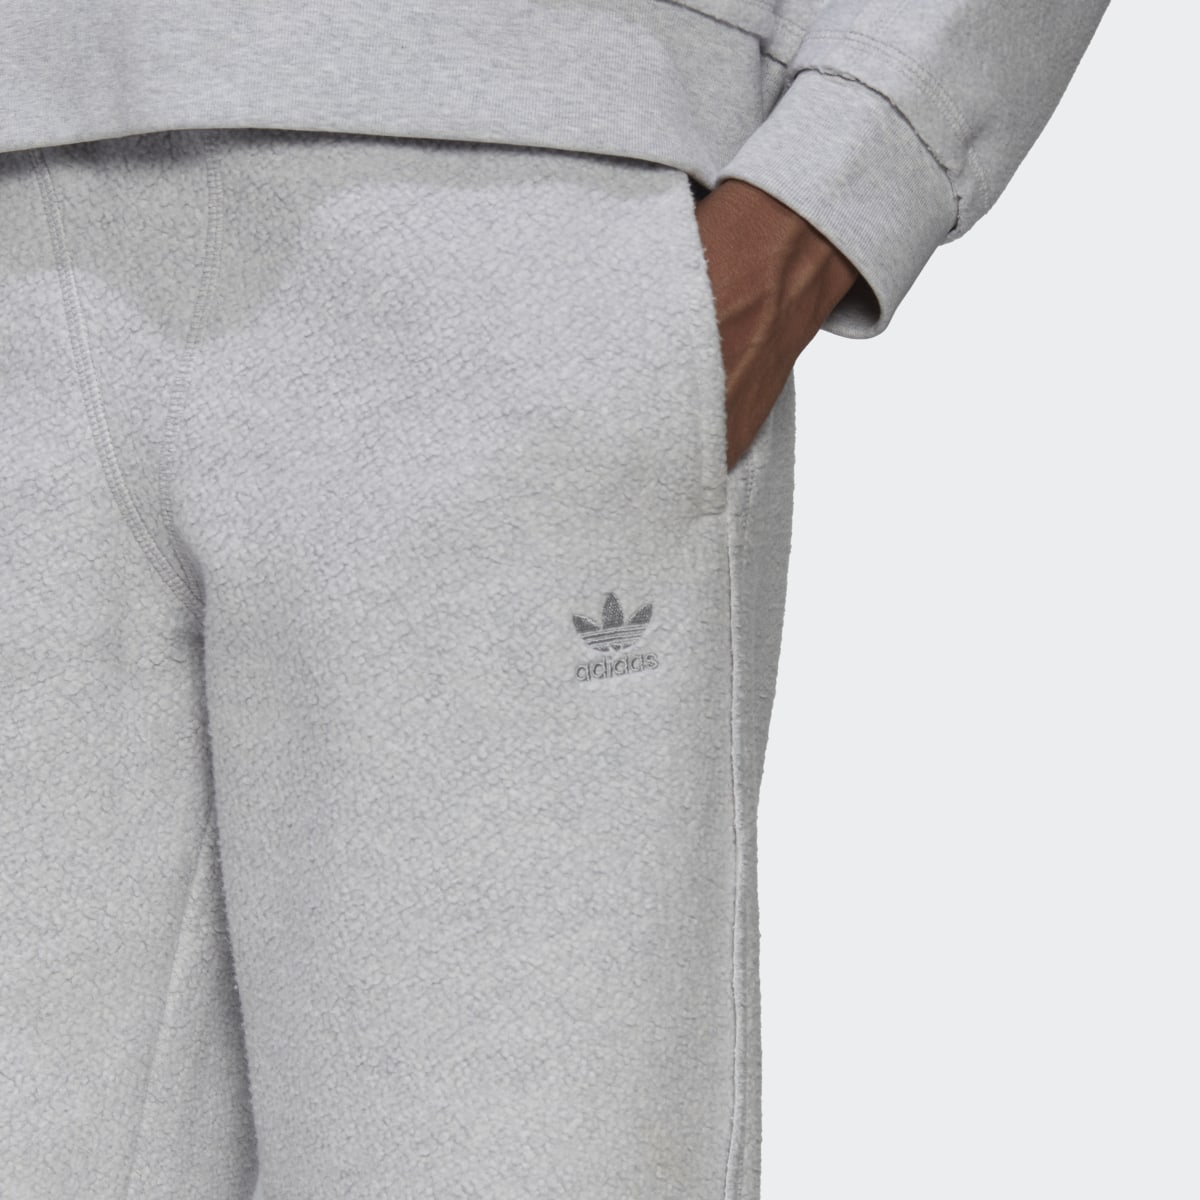 Adidas Sweat pants Loungewear. 5